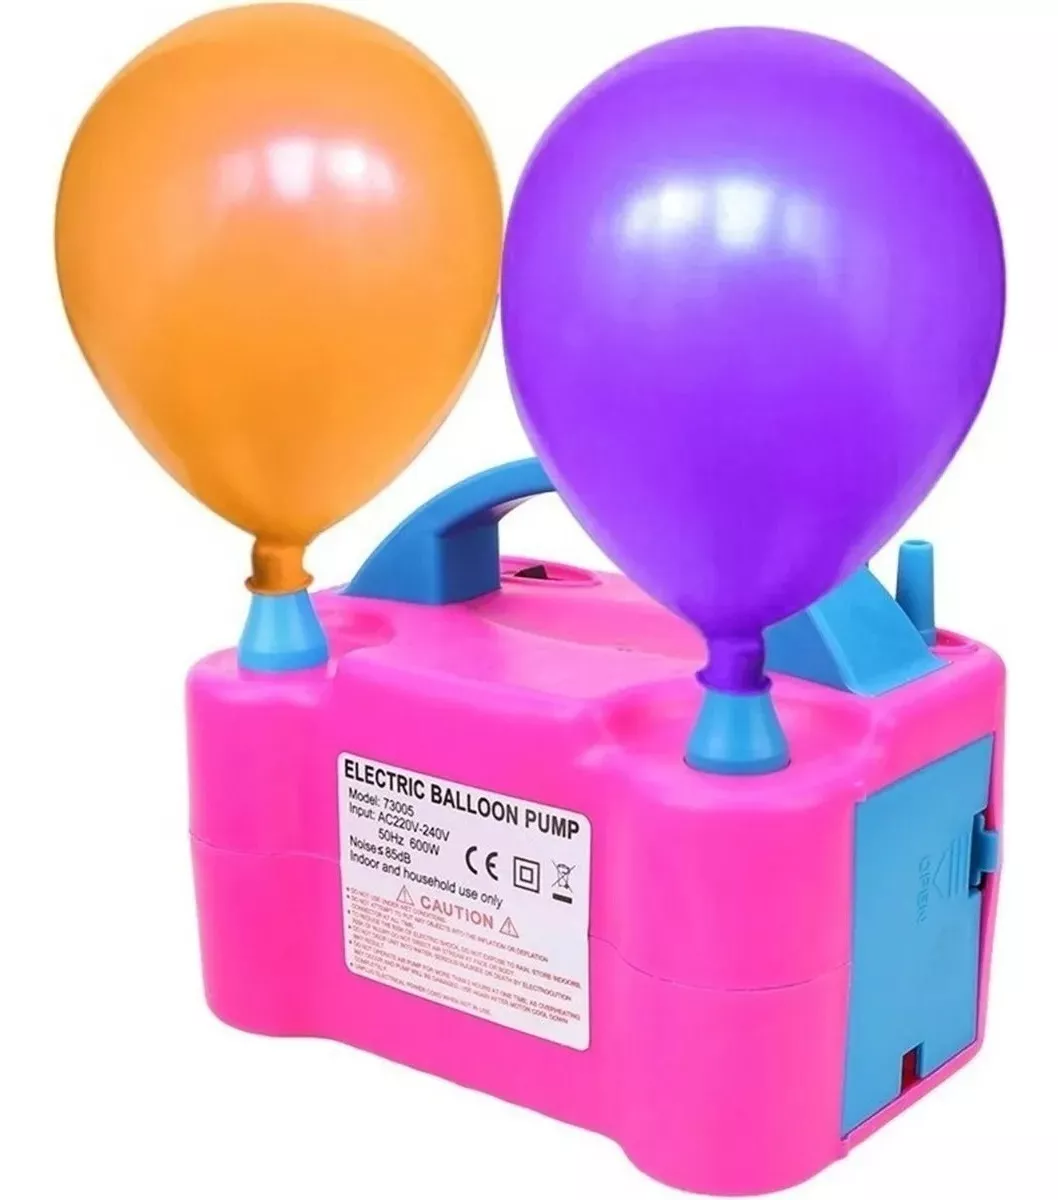 Segunda imagen para búsqueda de inflar globos